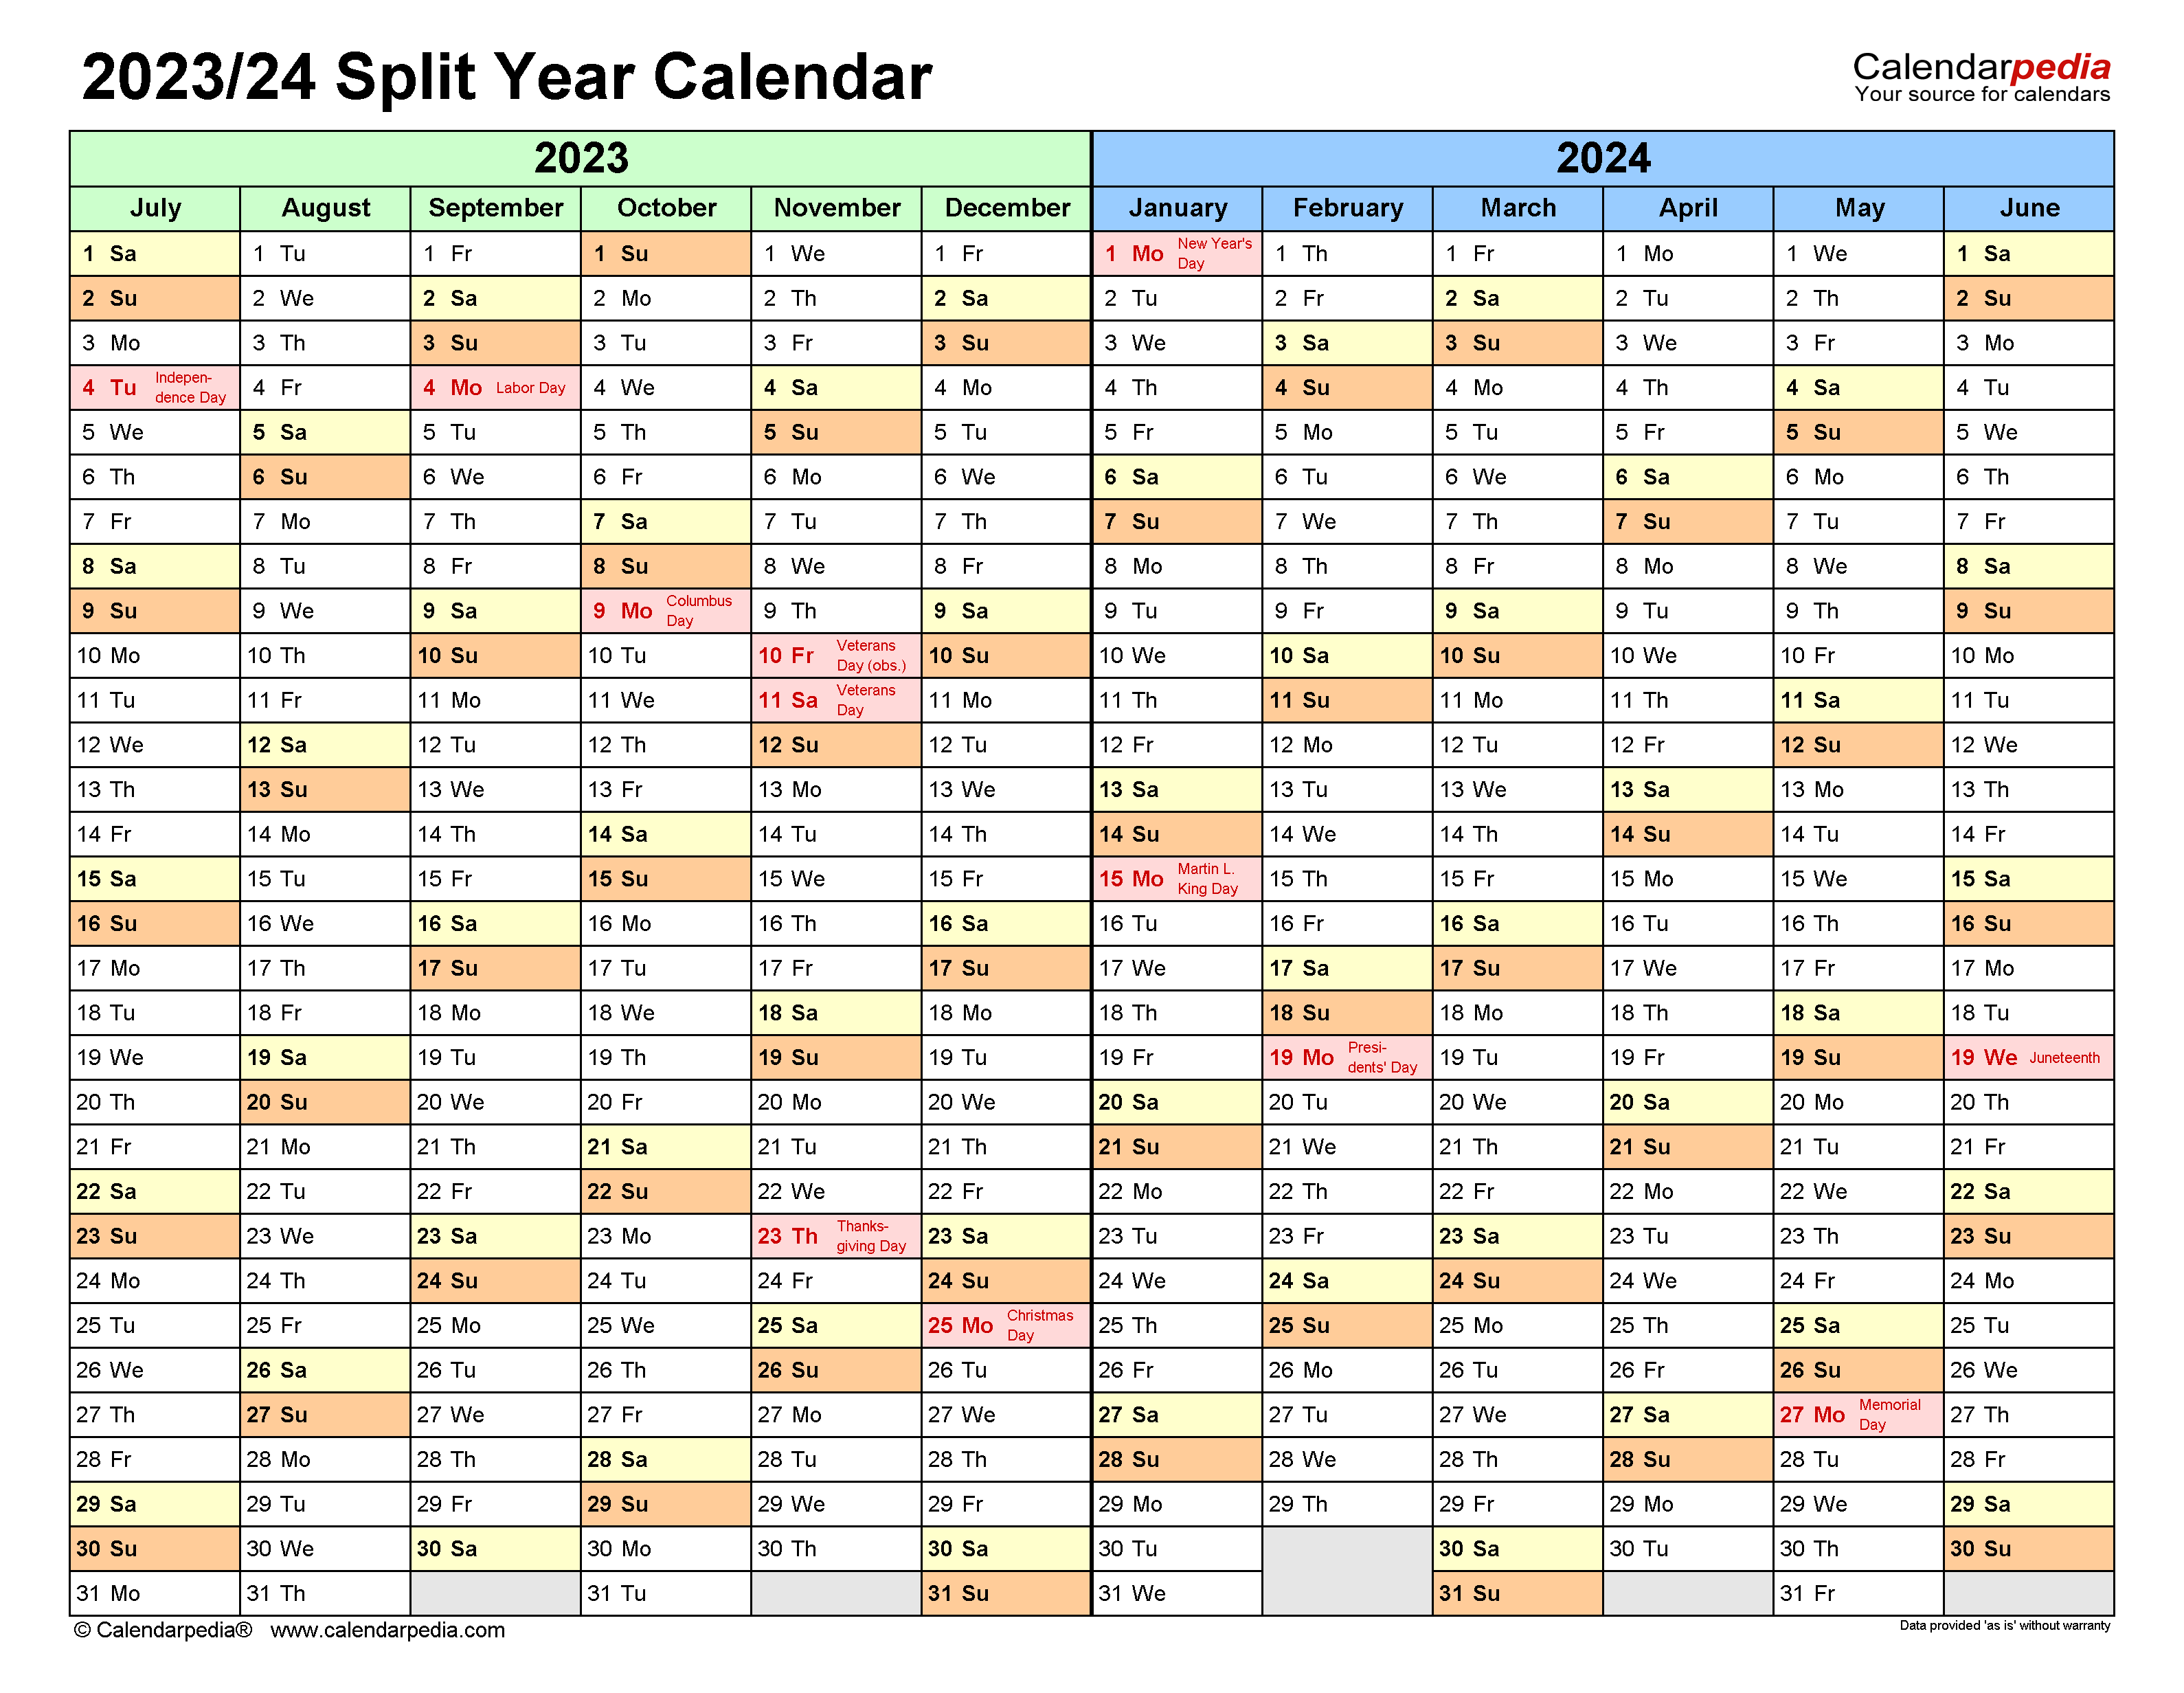 Split Year Calendars 2023/2024 (July To June) - Excel Templates with regard to Calendar Template July 2023 To June 2024